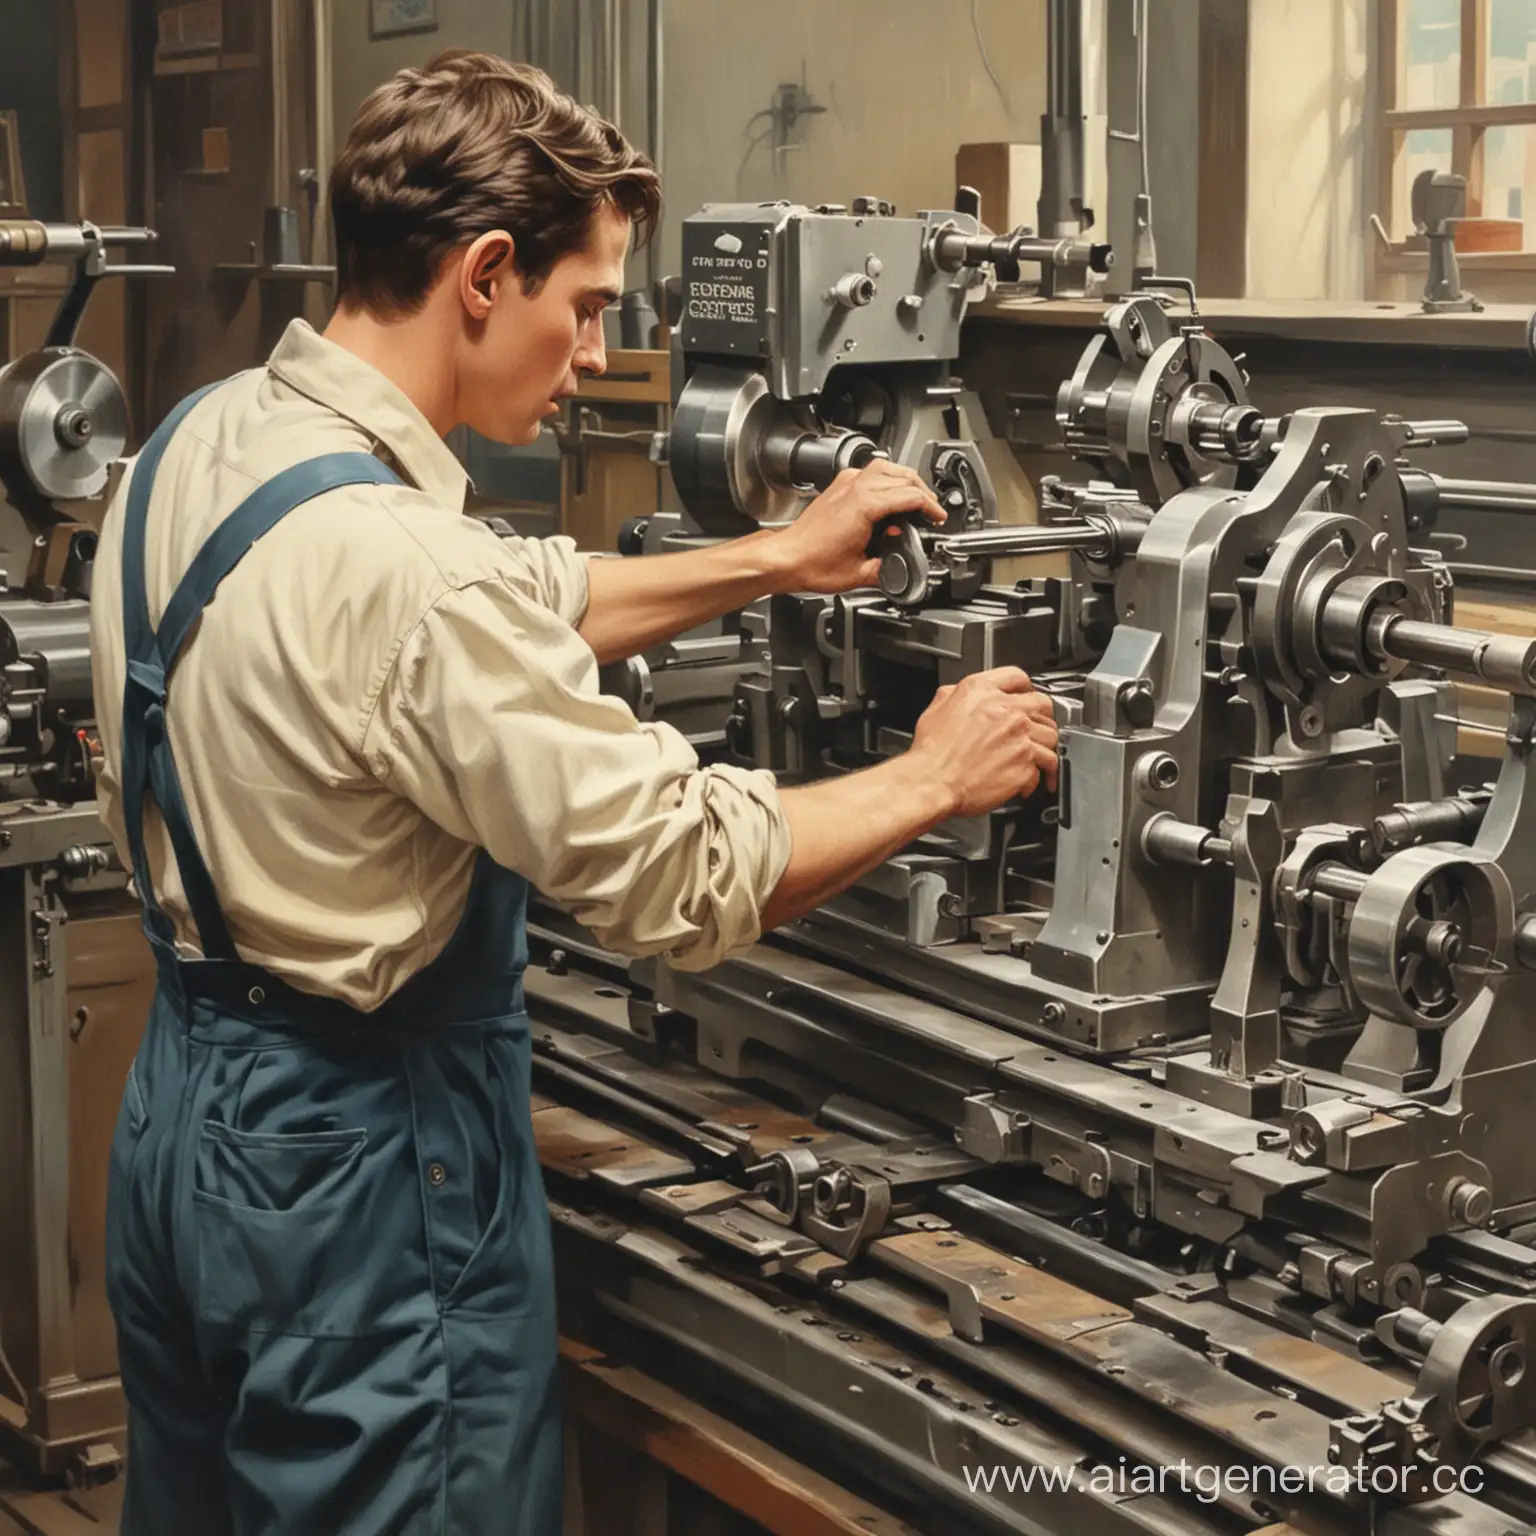 Craftsman-Operating-Lathe-Machine-in-Industrial-Setting